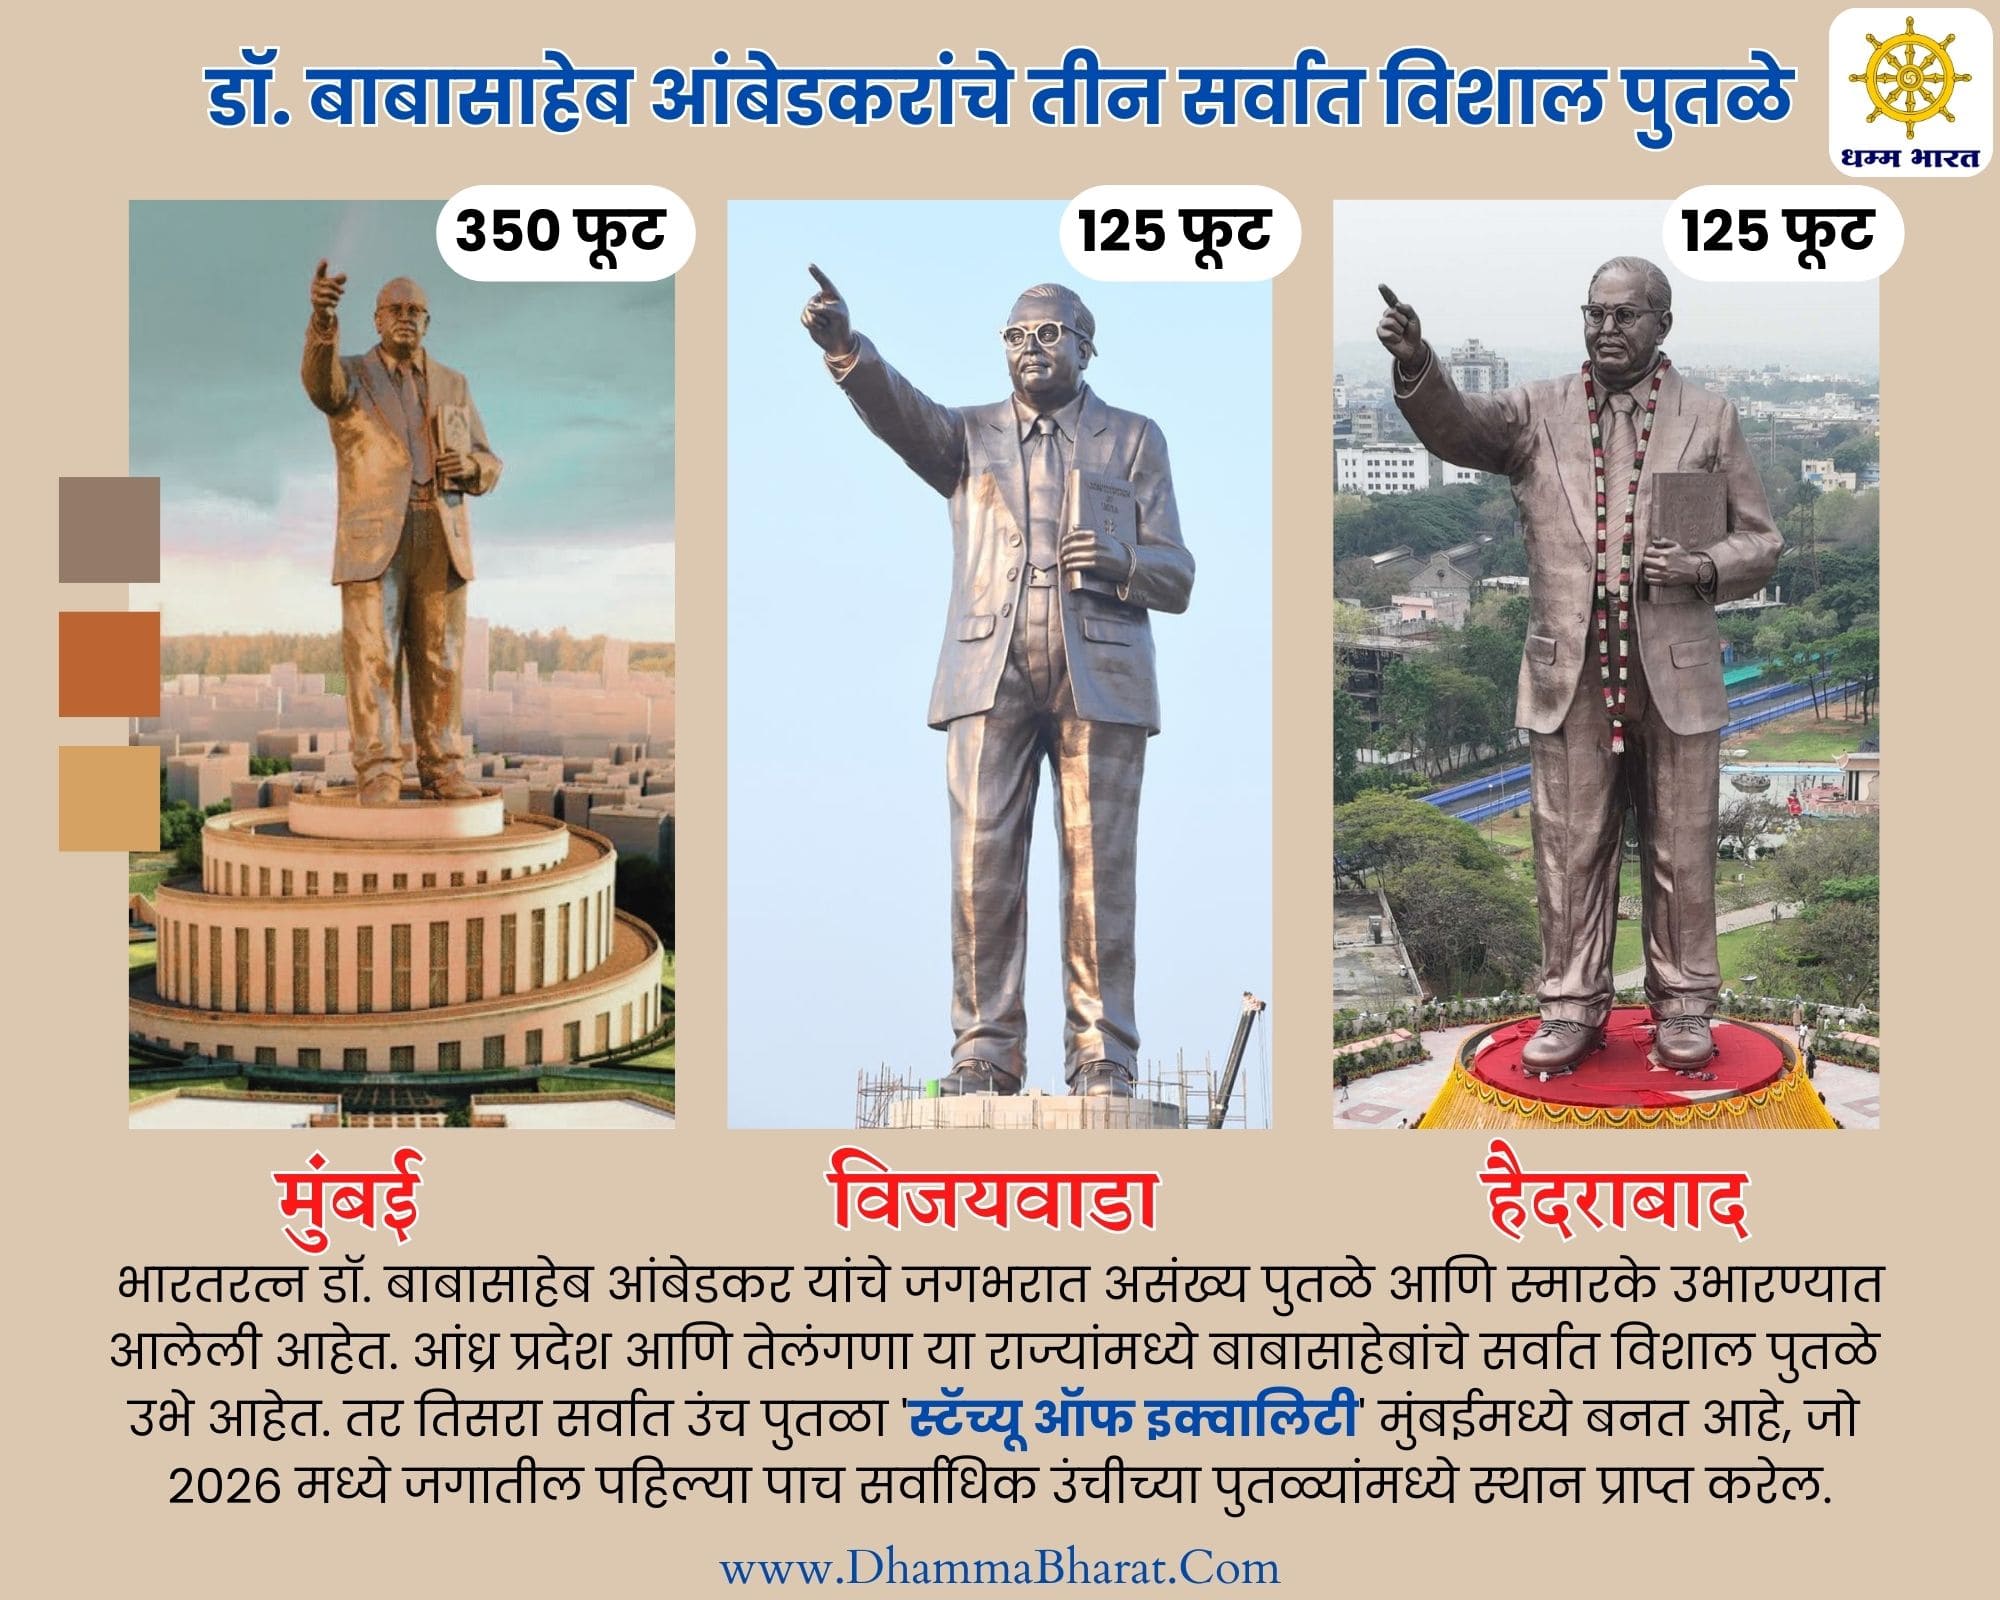 The 3 Tallest Statues of Dr. B.R. Ambedkar